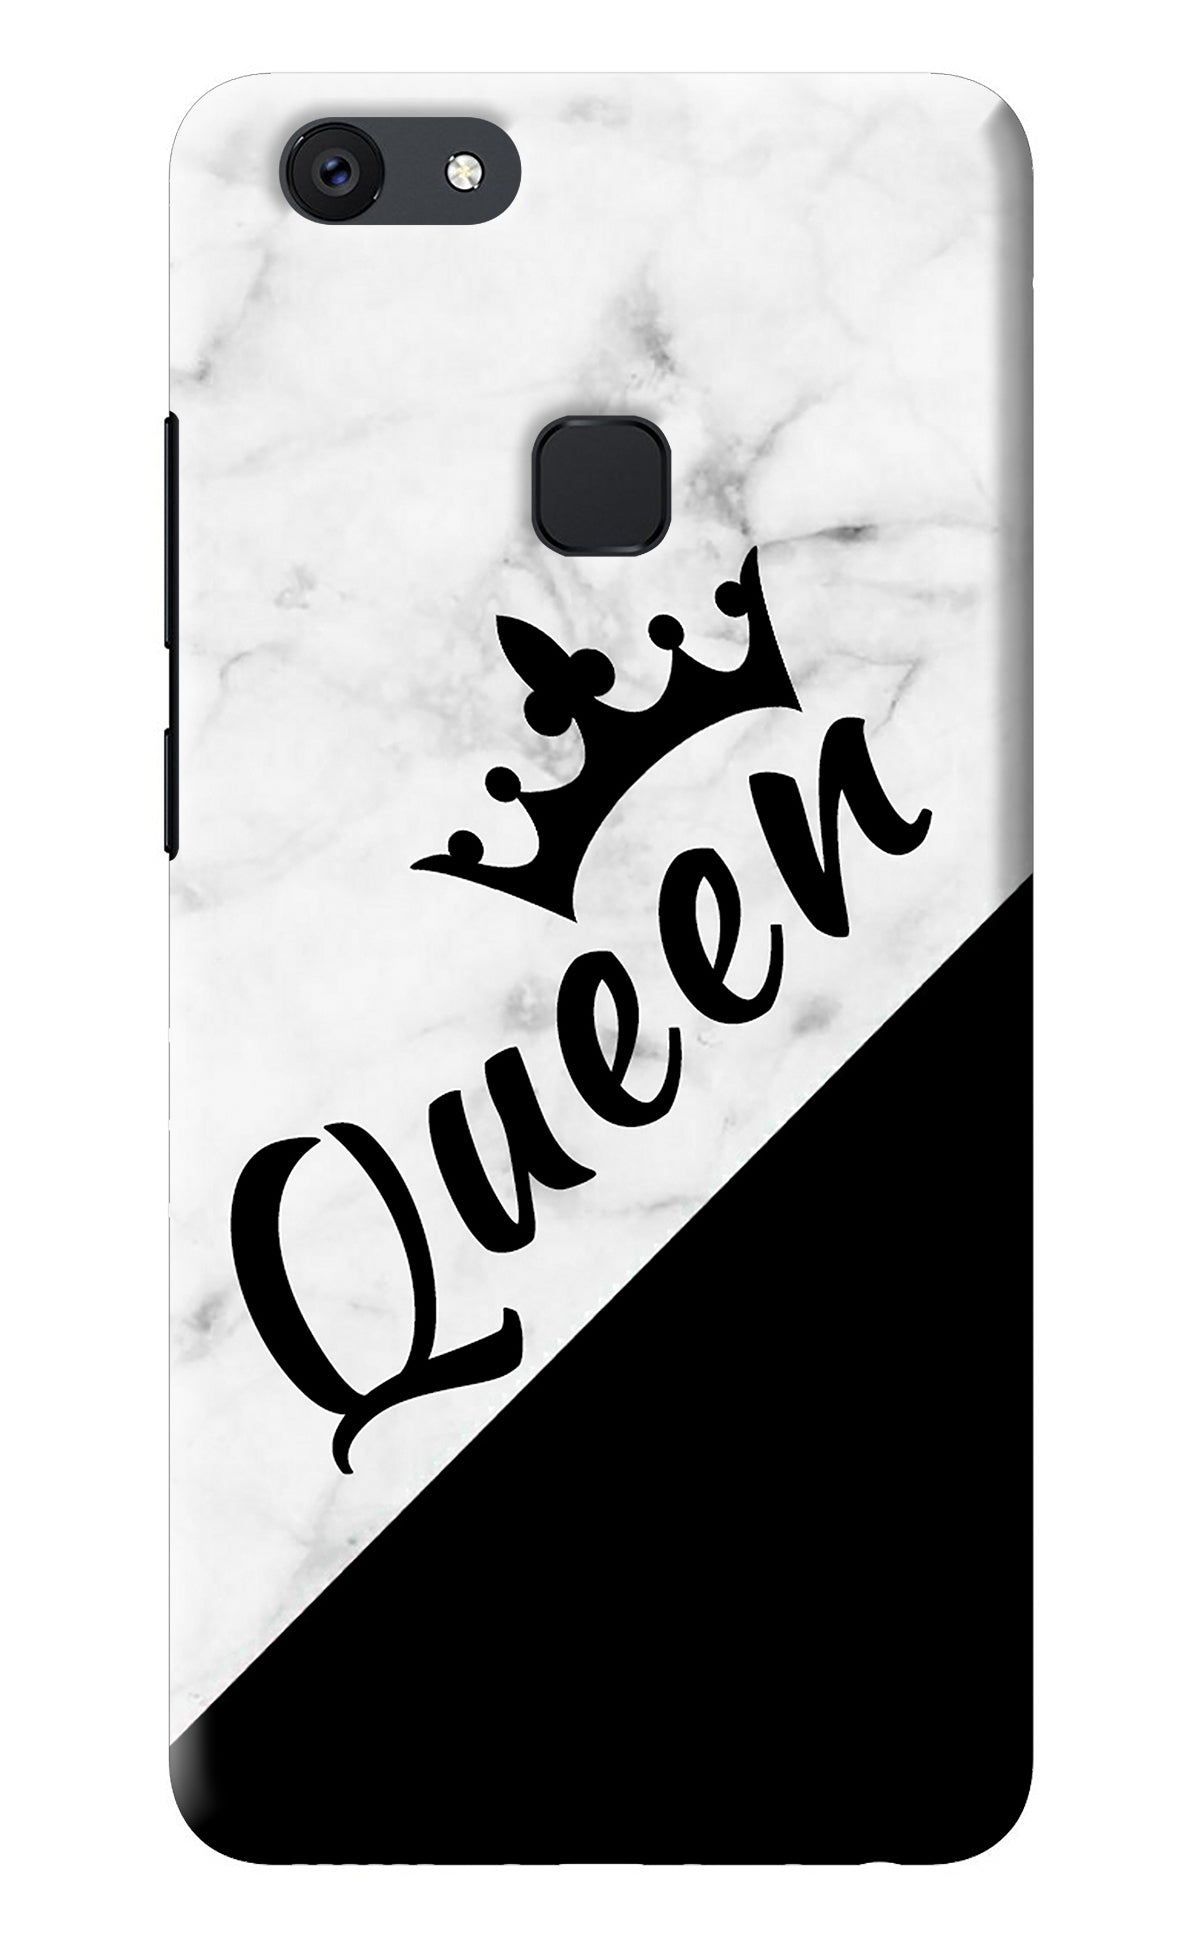 Queen Vivo V7 plus Back Cover